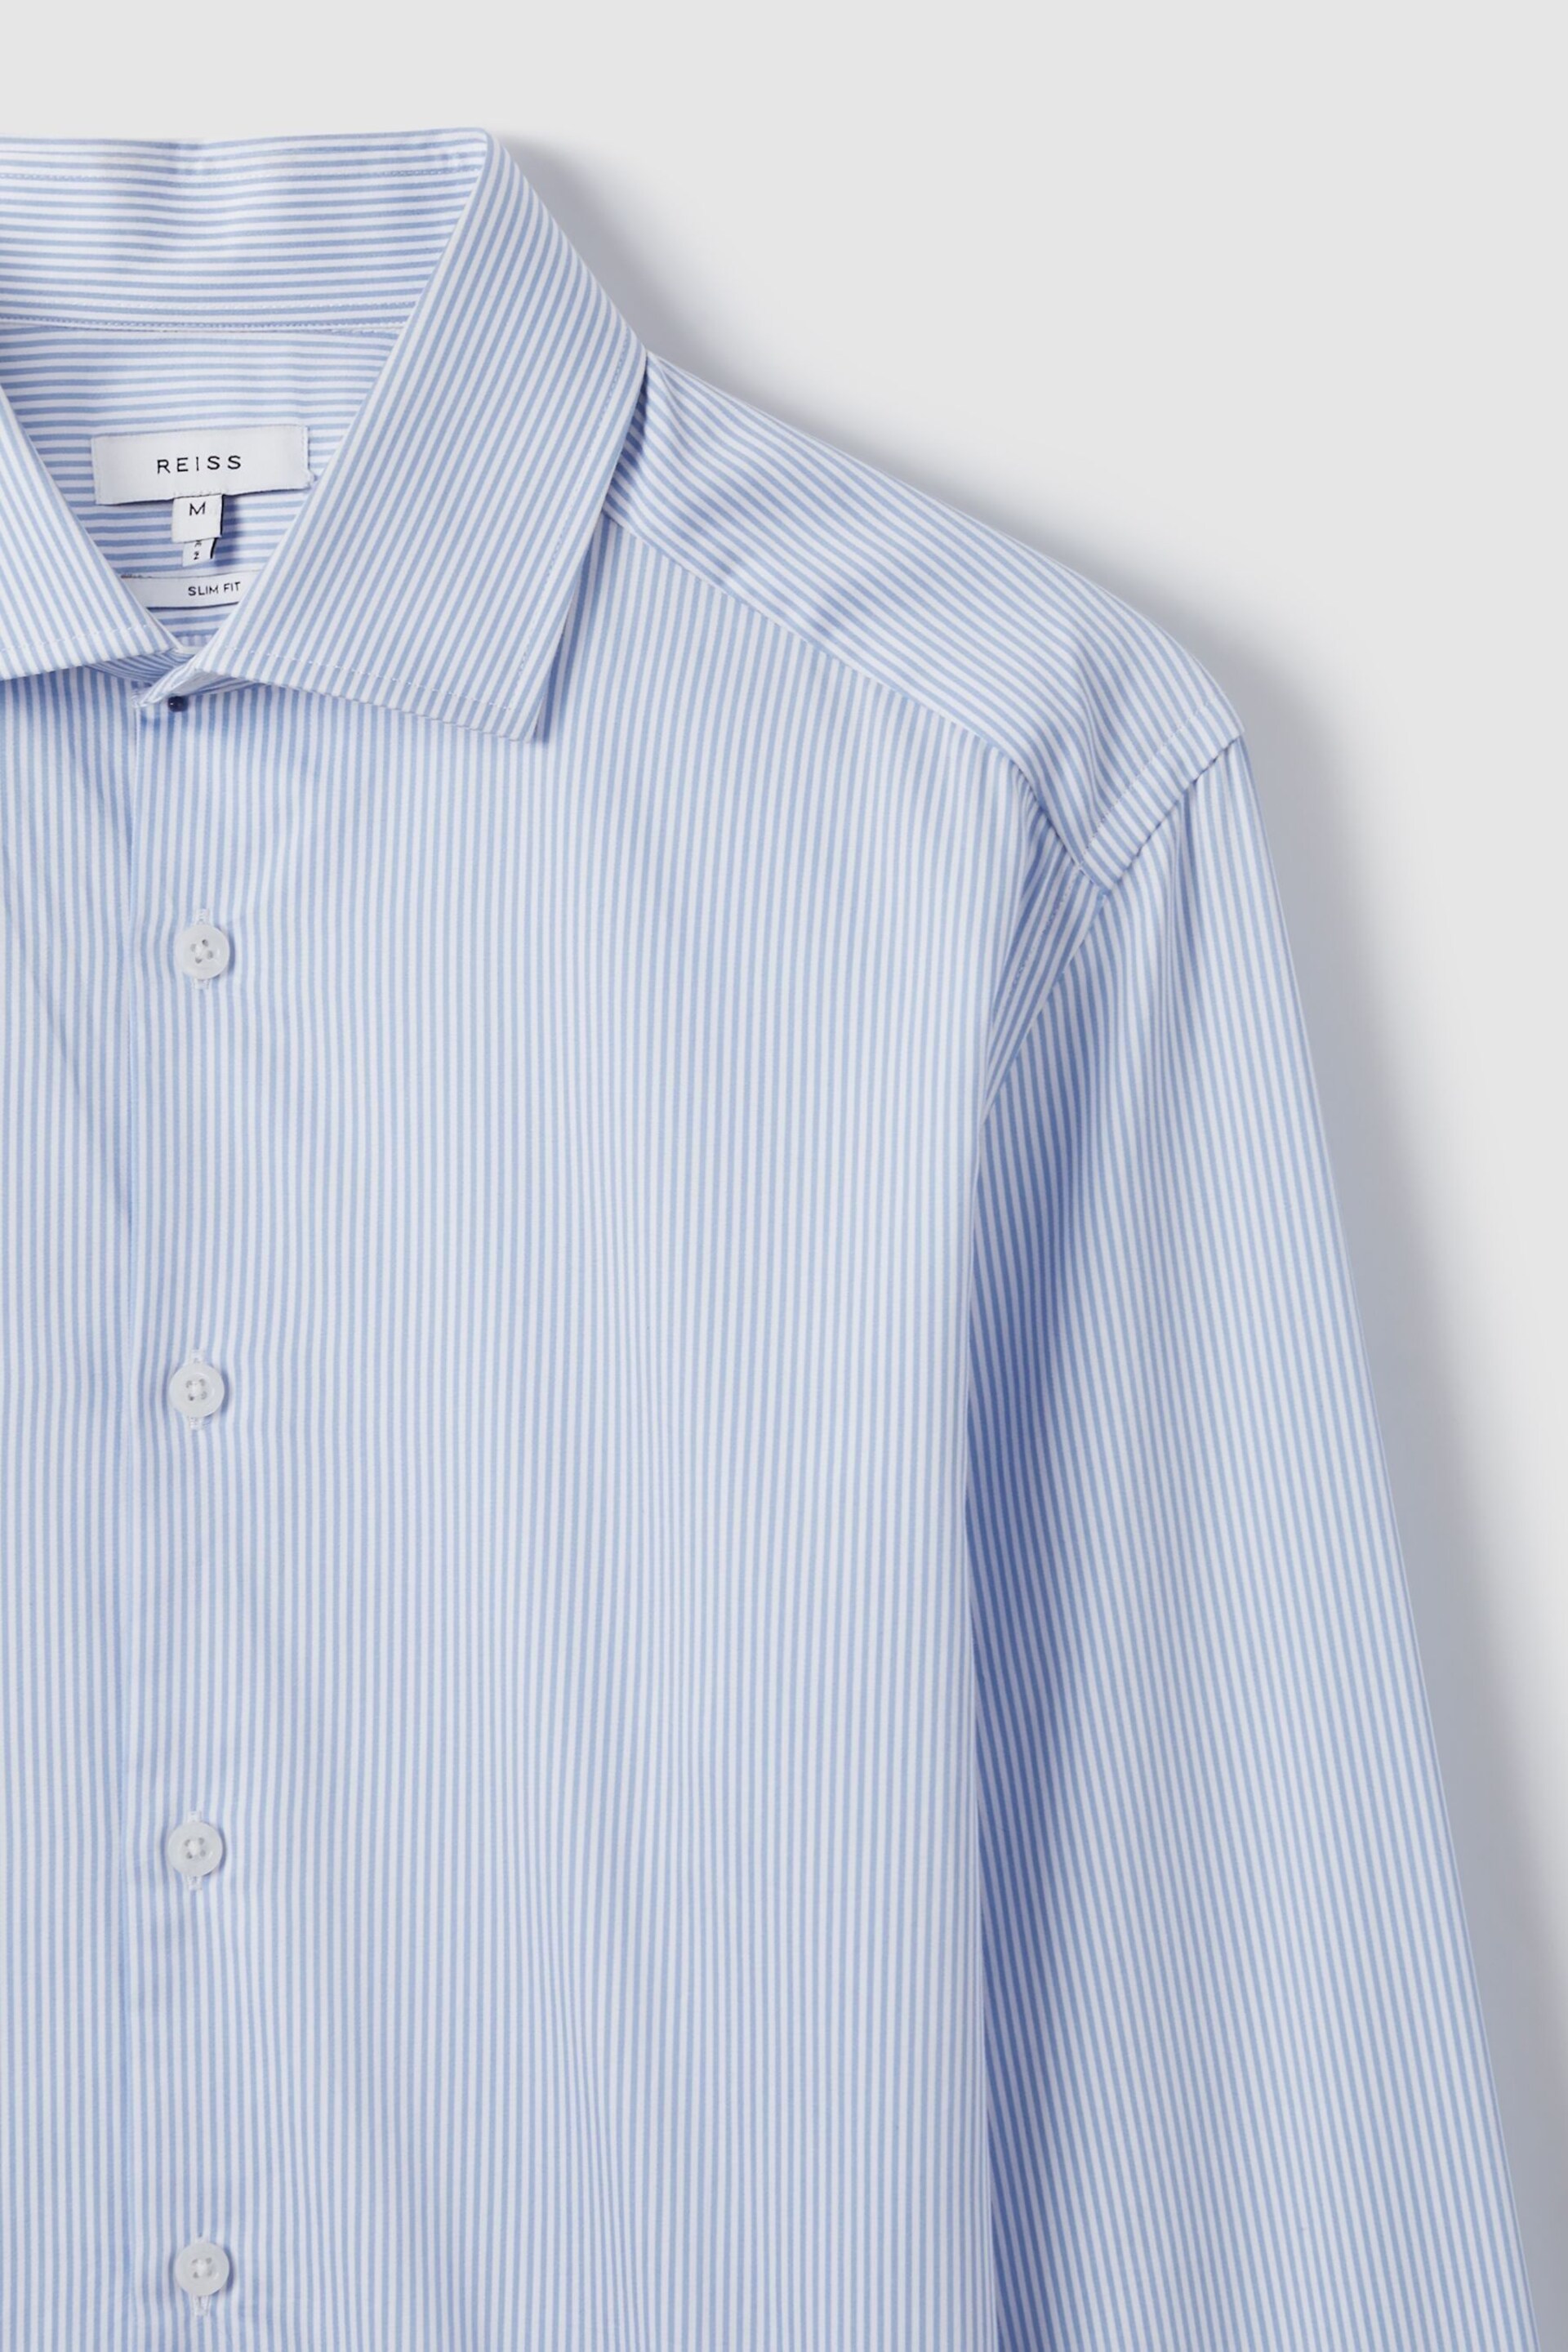 Reiss Blue Stripe Remote Slim Fit Cotton Sateen Shirt - Image 5 of 5